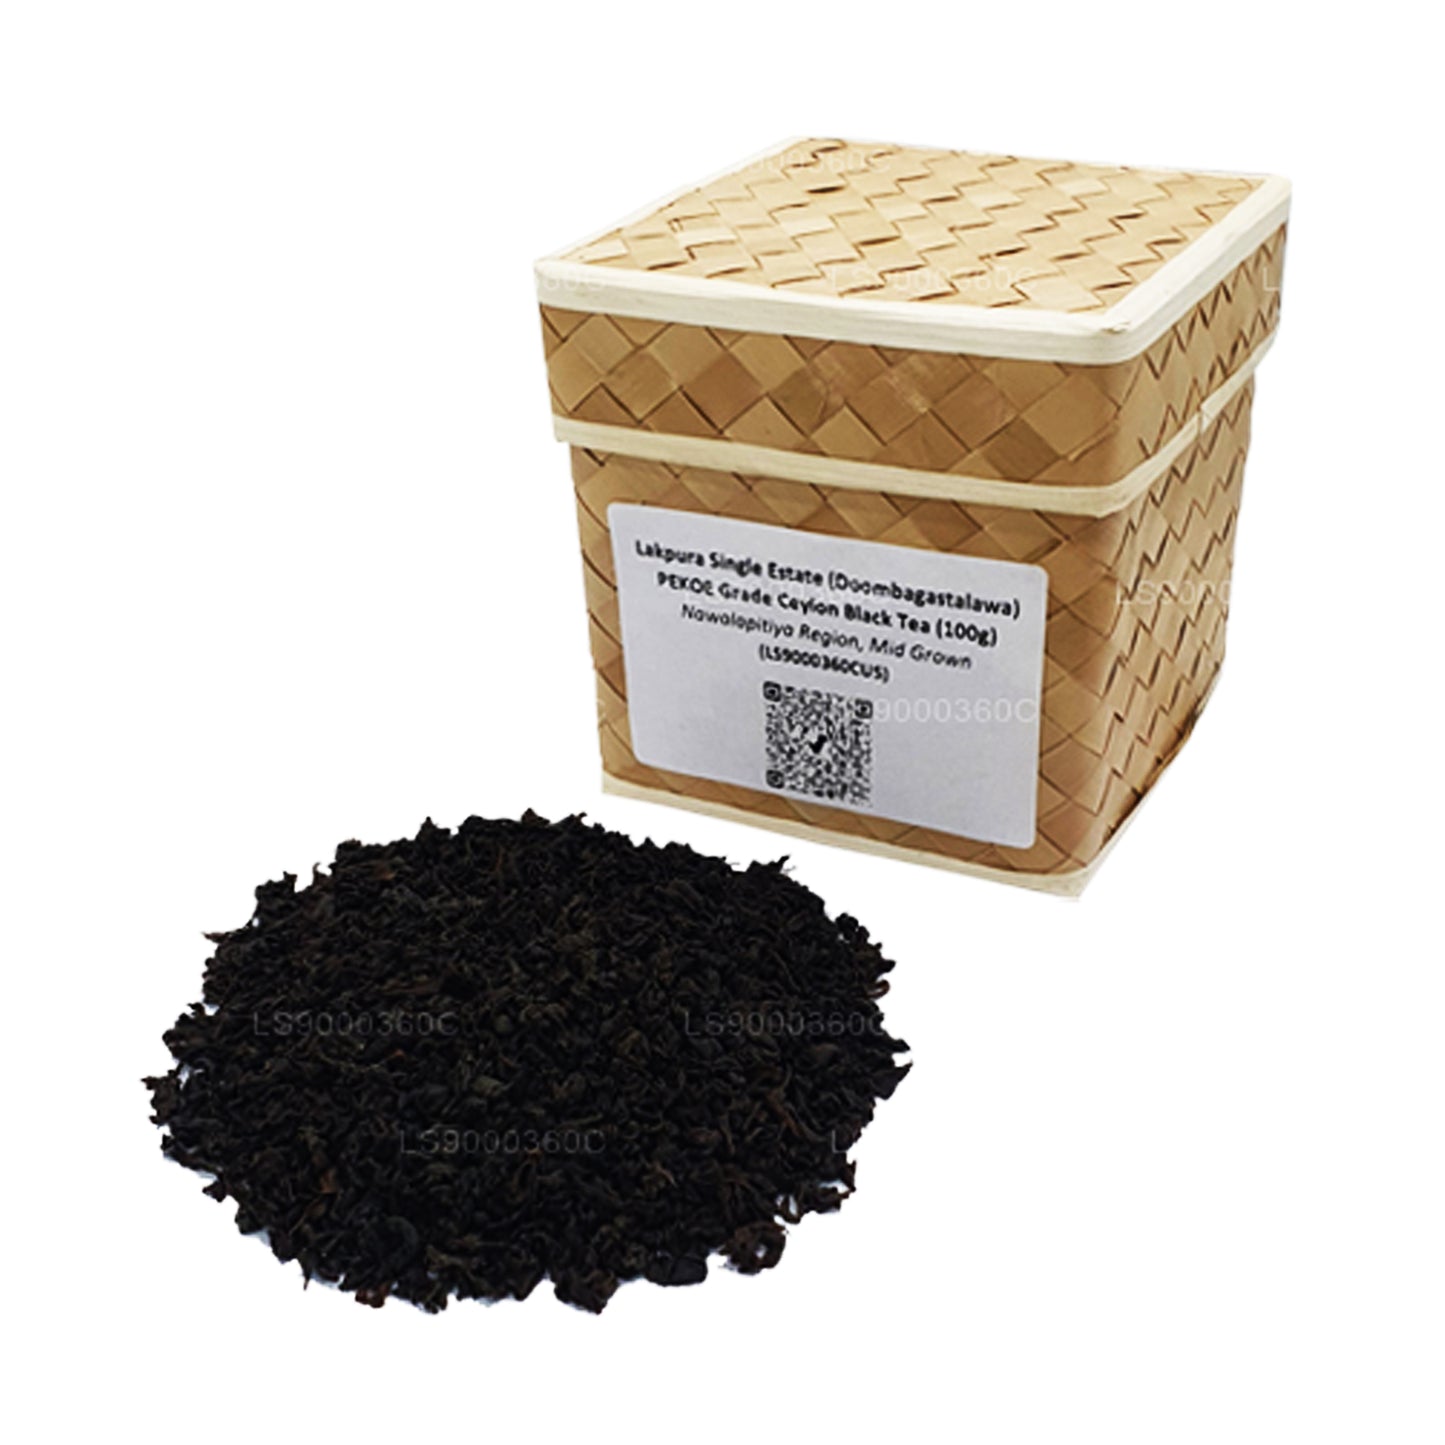 Thé noir de Ceylan Lakpura Single Estate (Doombagastalawa) PEKOE Grade (100 g)